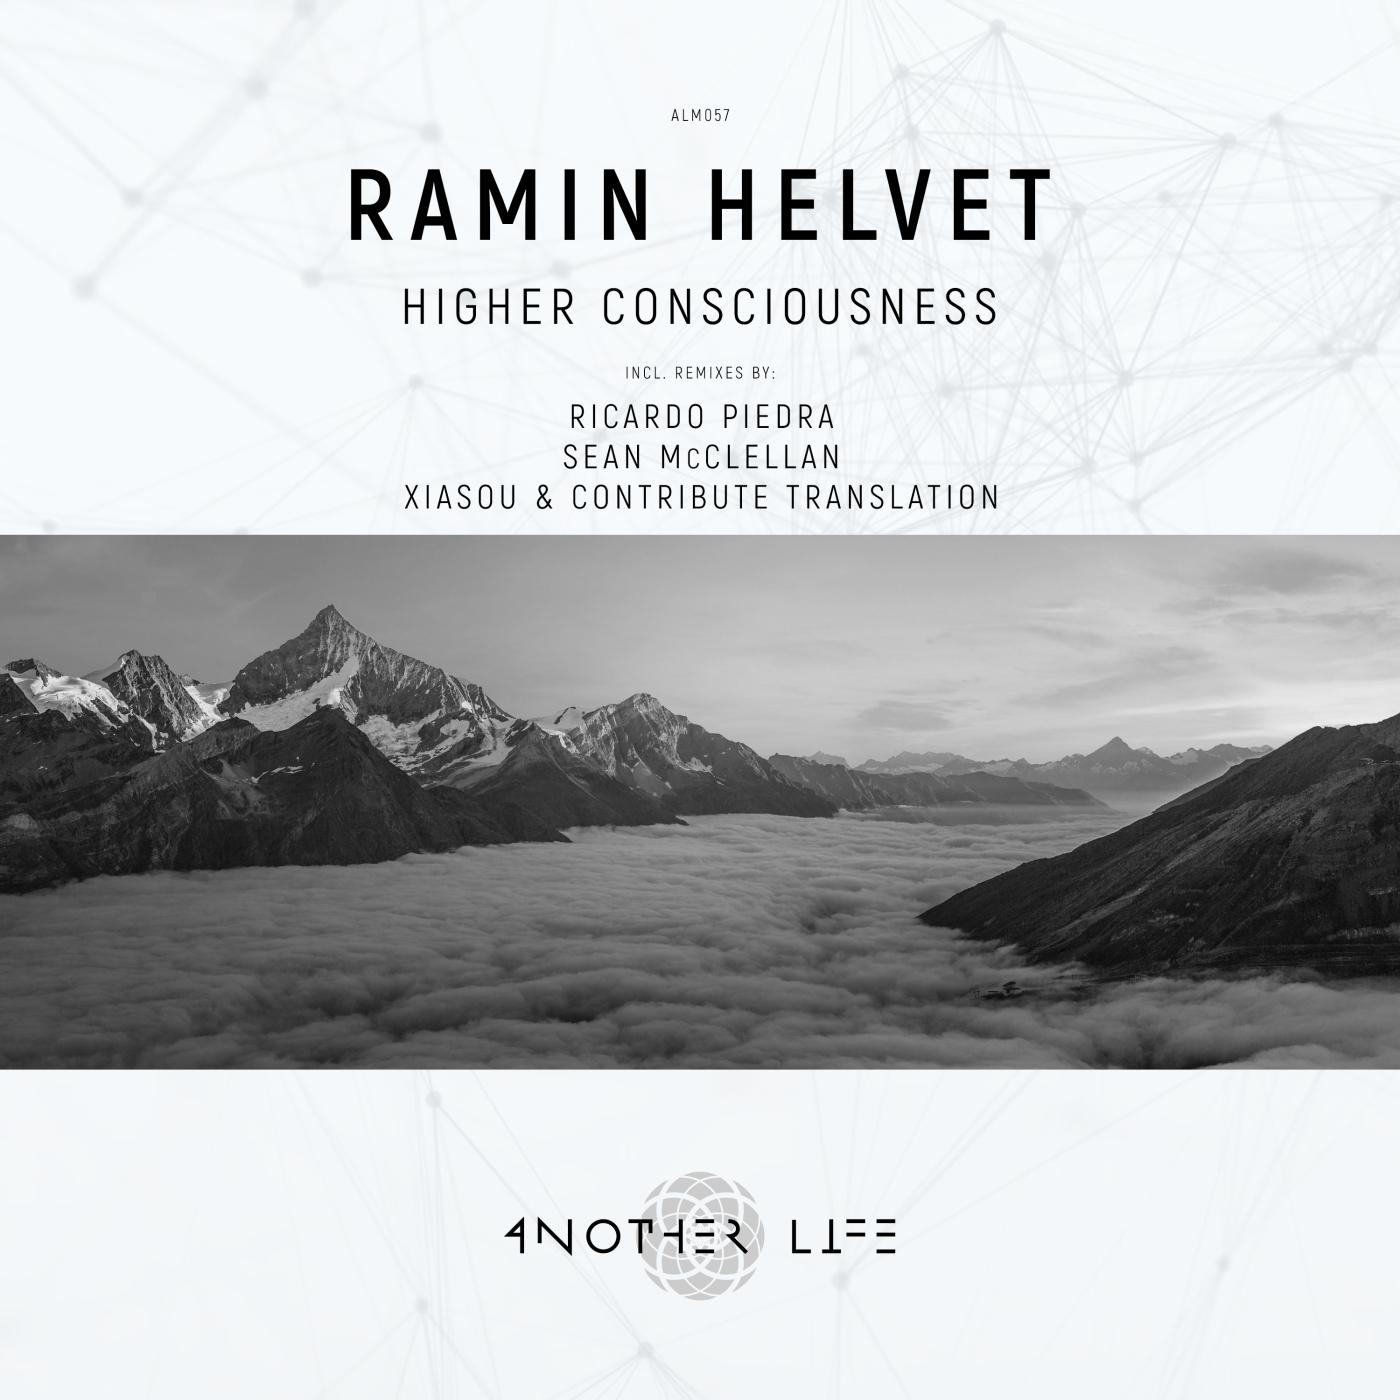 Ramin Helvet - Higher Consciousness (Xiasou & Contribute Translation Remix)